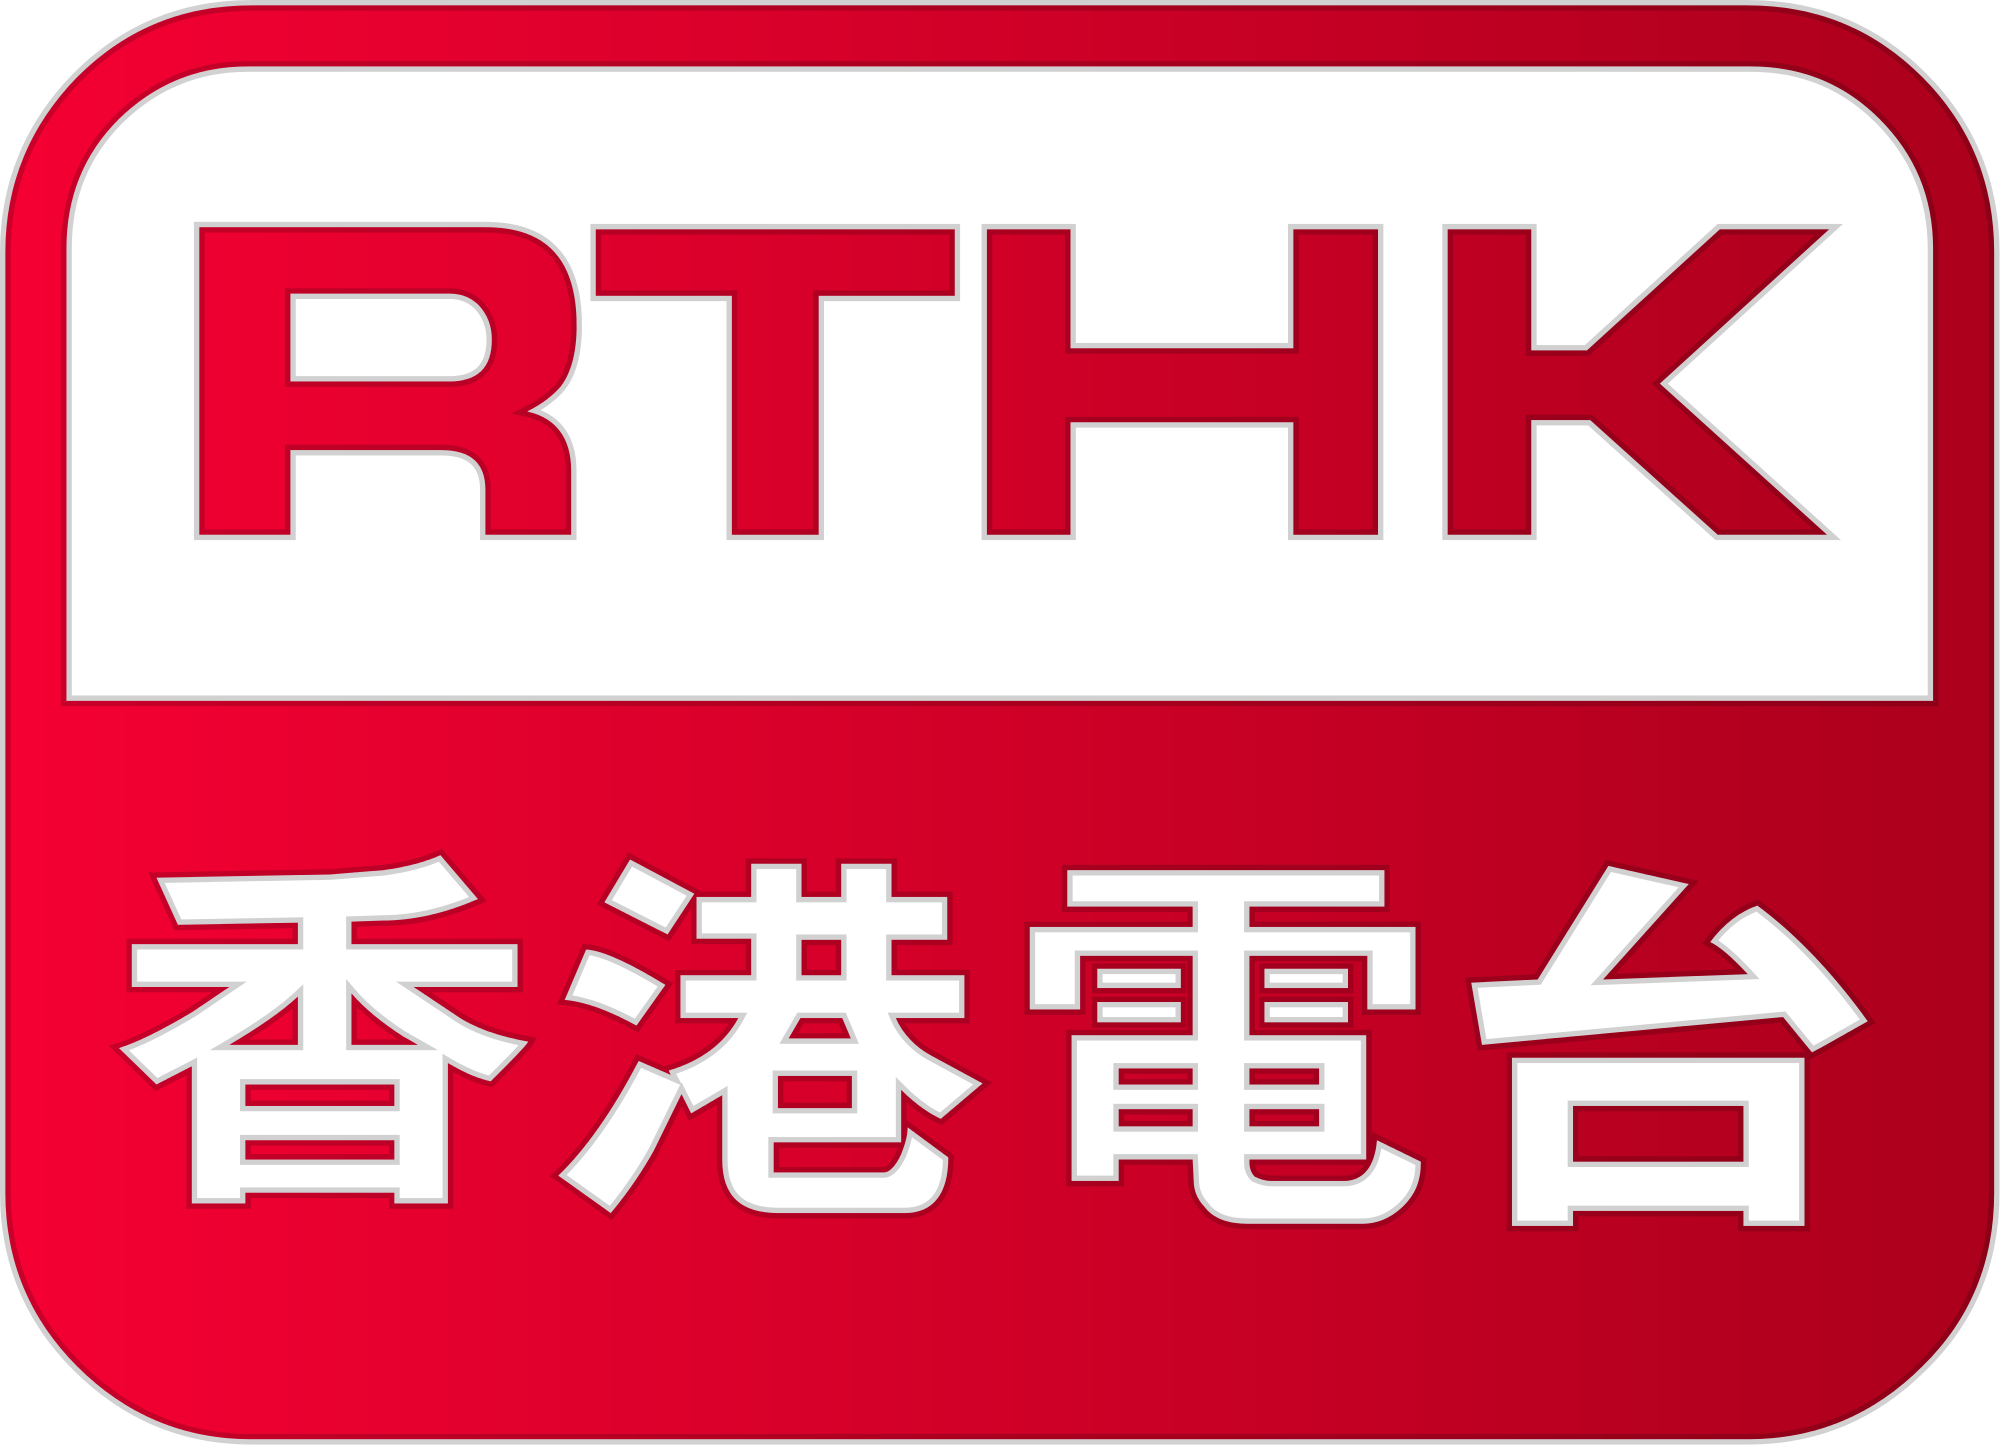 digital radio in hong kong - station logo RTHK